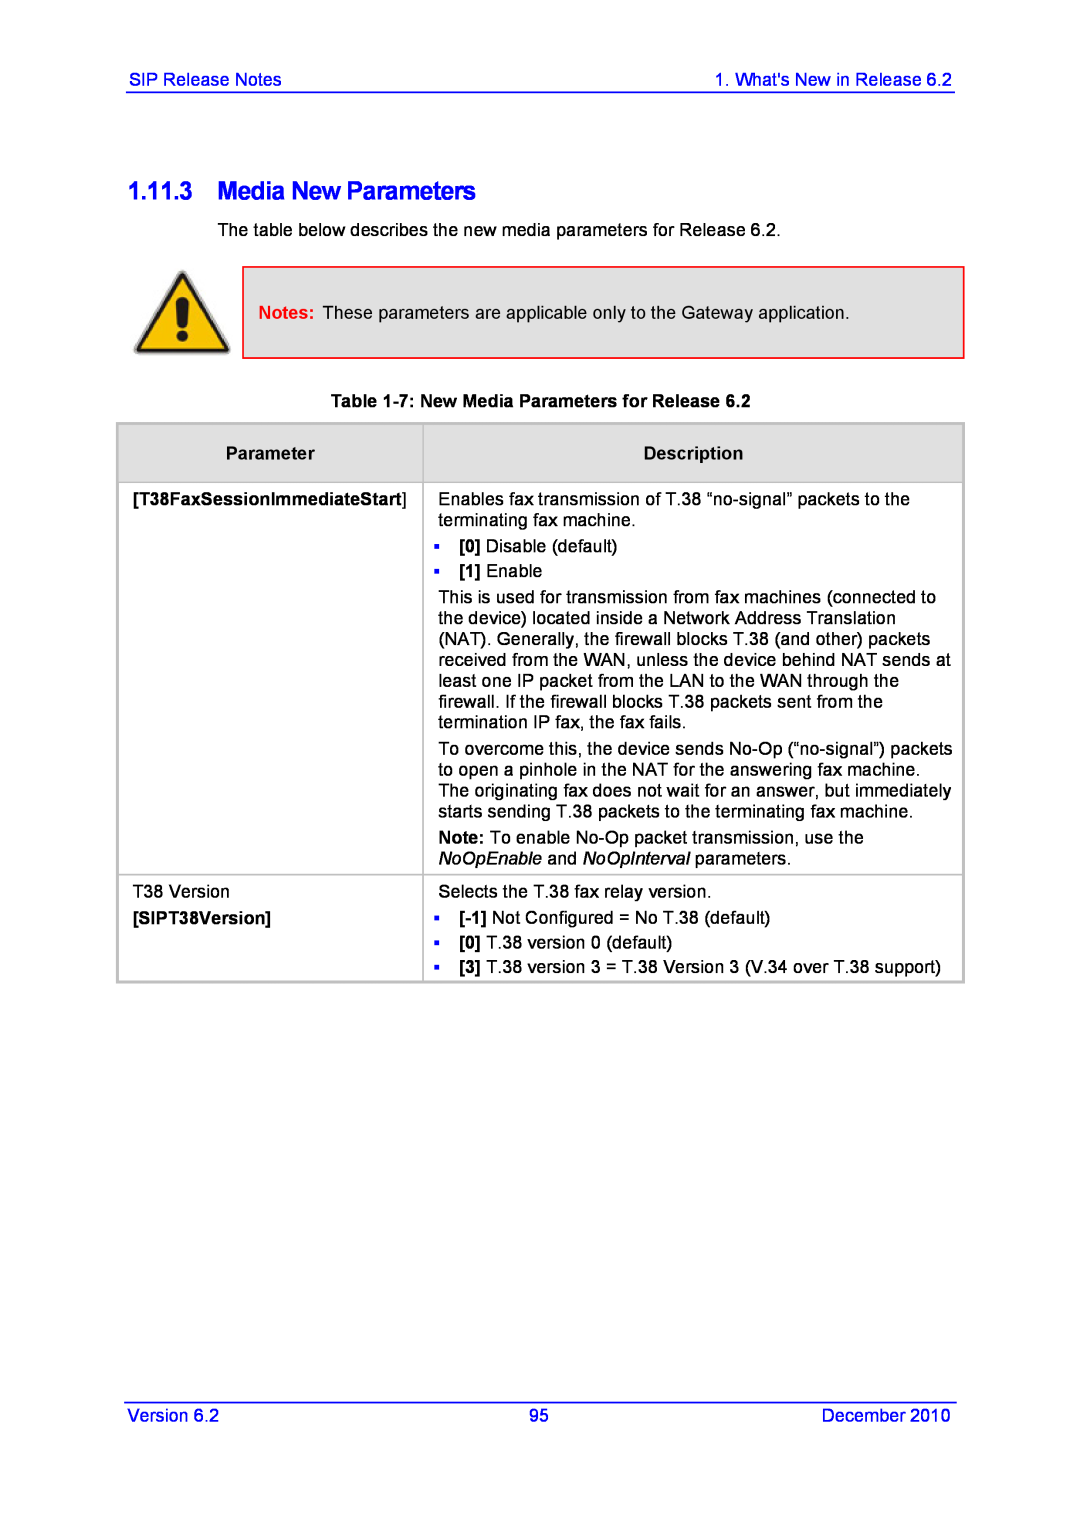 AudioControl VERSION 6.2 manual Media New Parameters, 7 New Media Parameters for Release, Description, SIPT38Version 